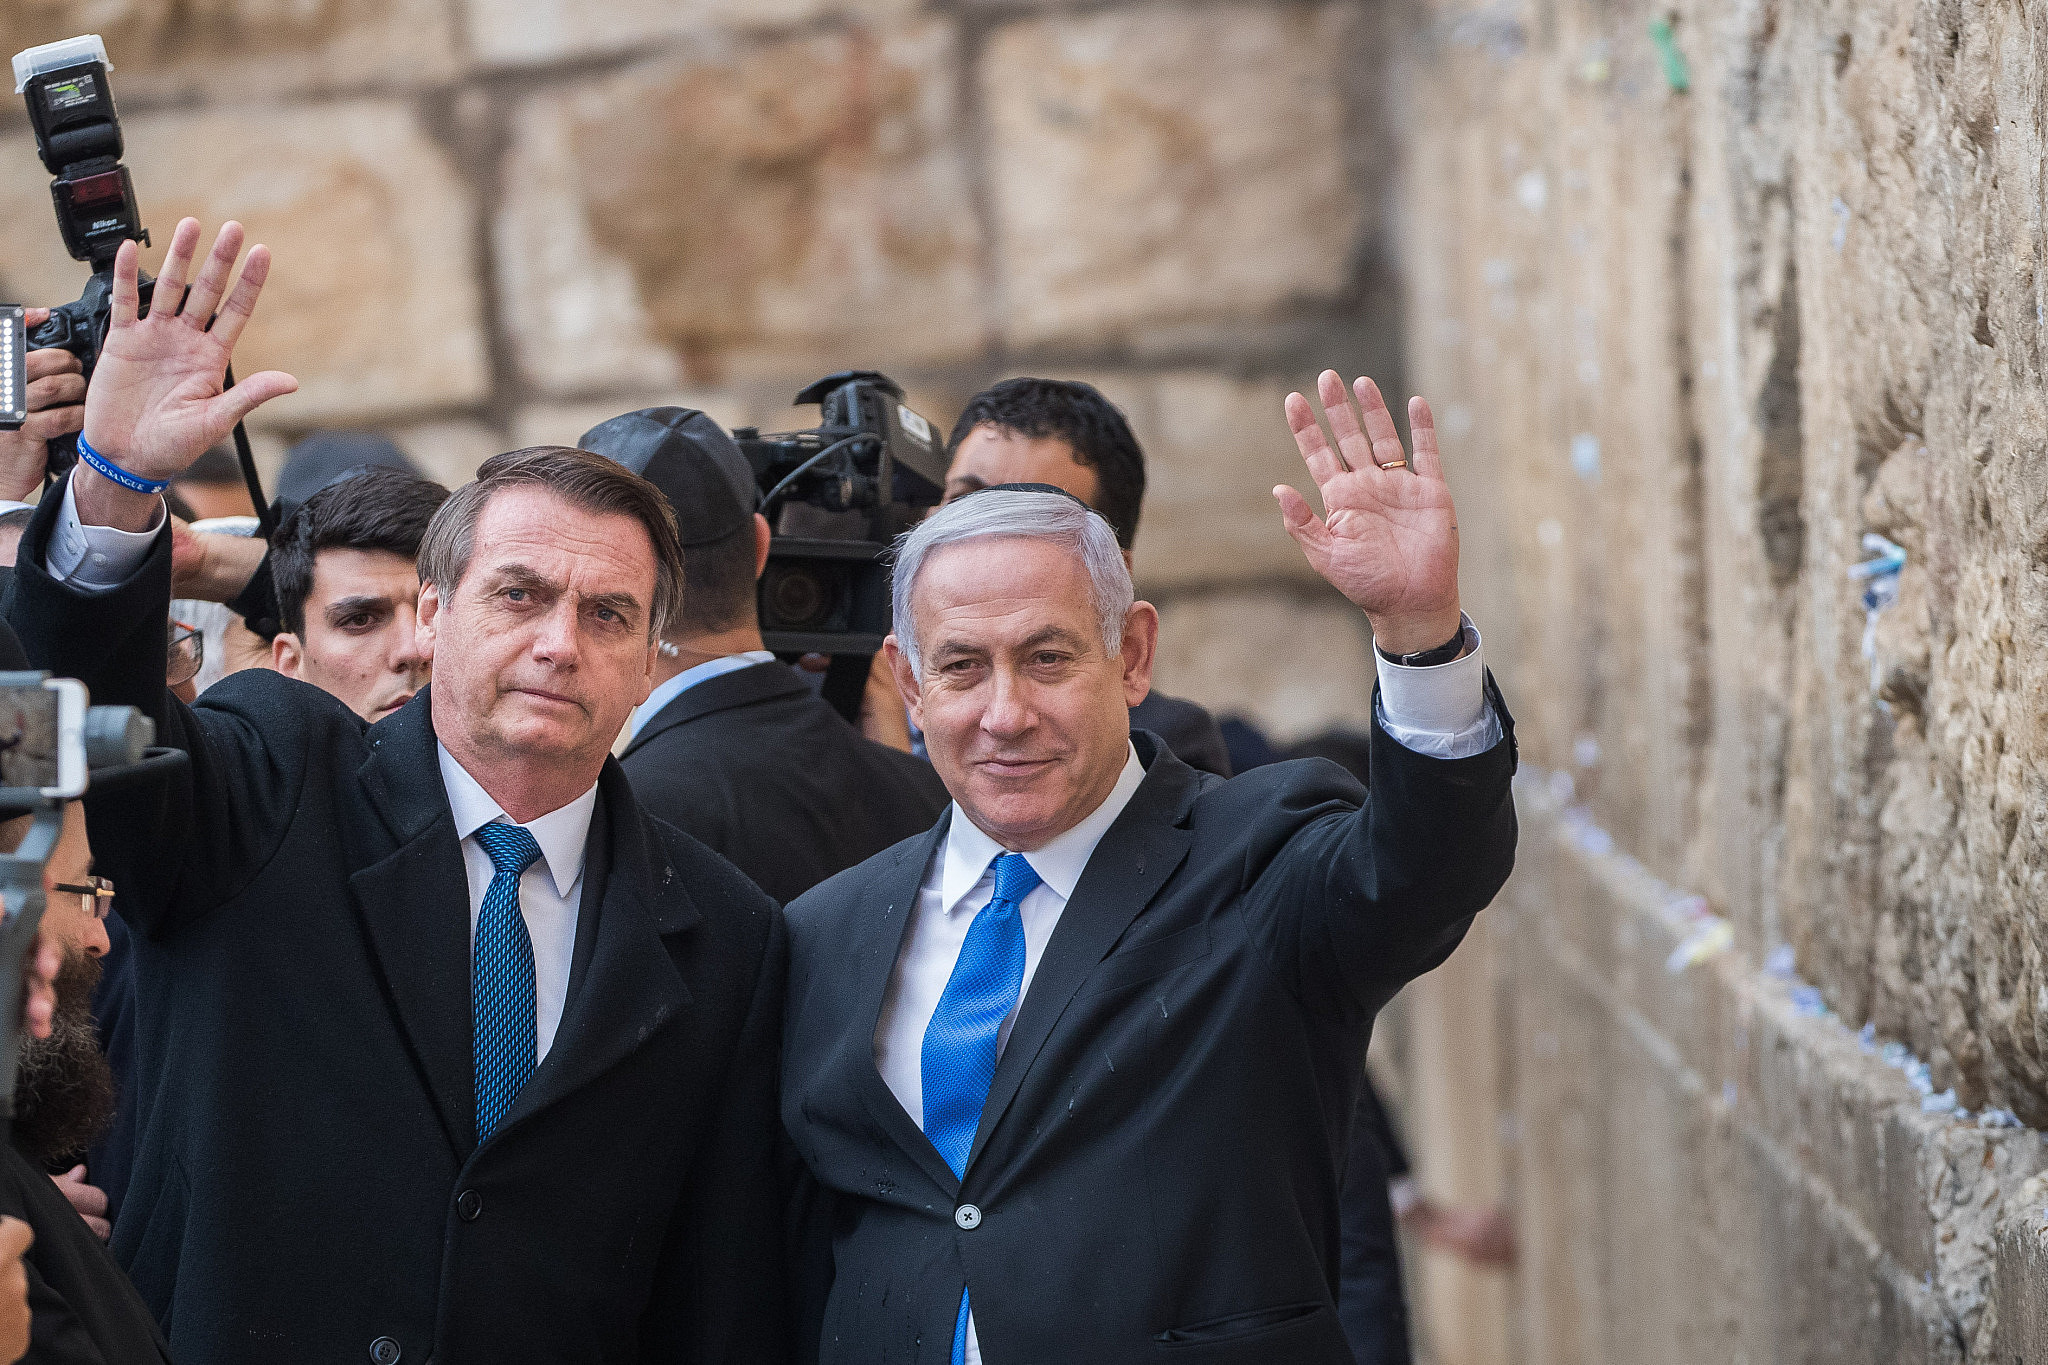 Brazilian president Jair Bolsonaro and Israeli Prime Minister Benjamin Netanyahu during a visit at the Western Wall, Judaism's holiest site, in Jerusalem's Old City, April 1, 2019. (Yonatan Sindel/Flash90)